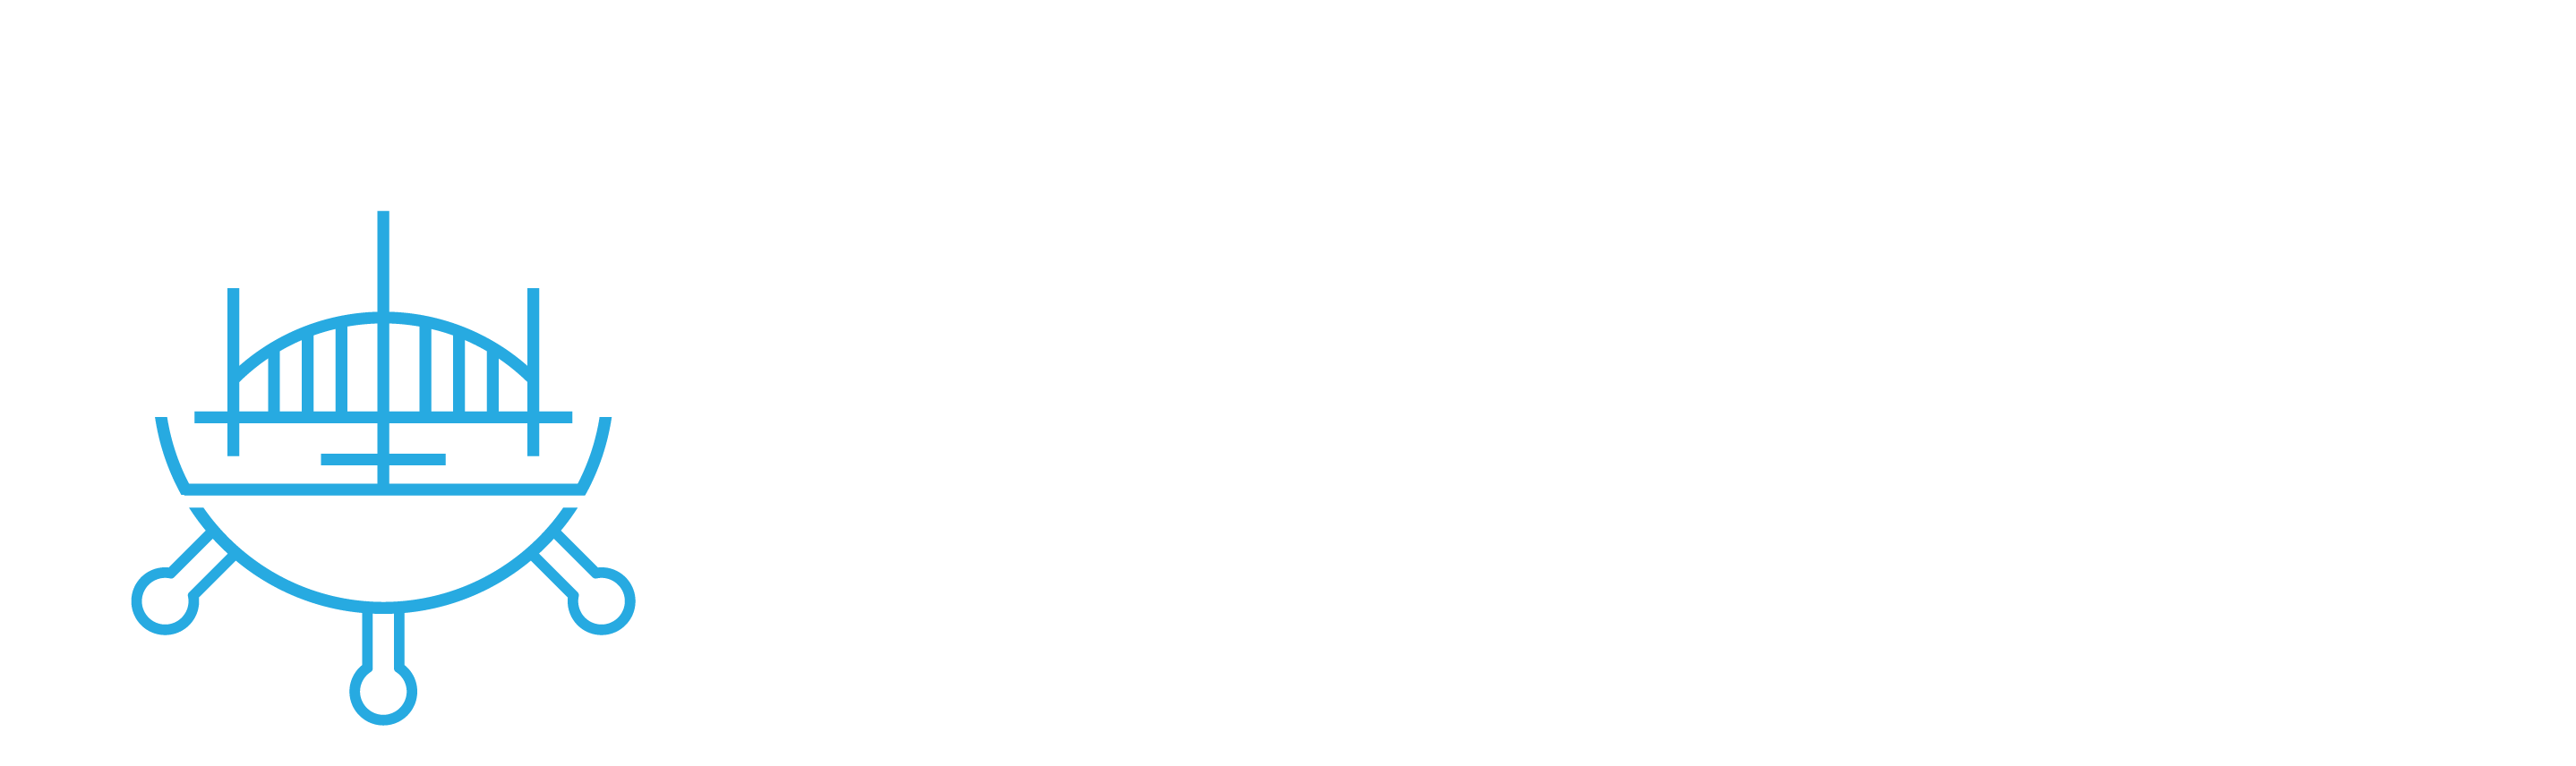 Bridge Helm Logo